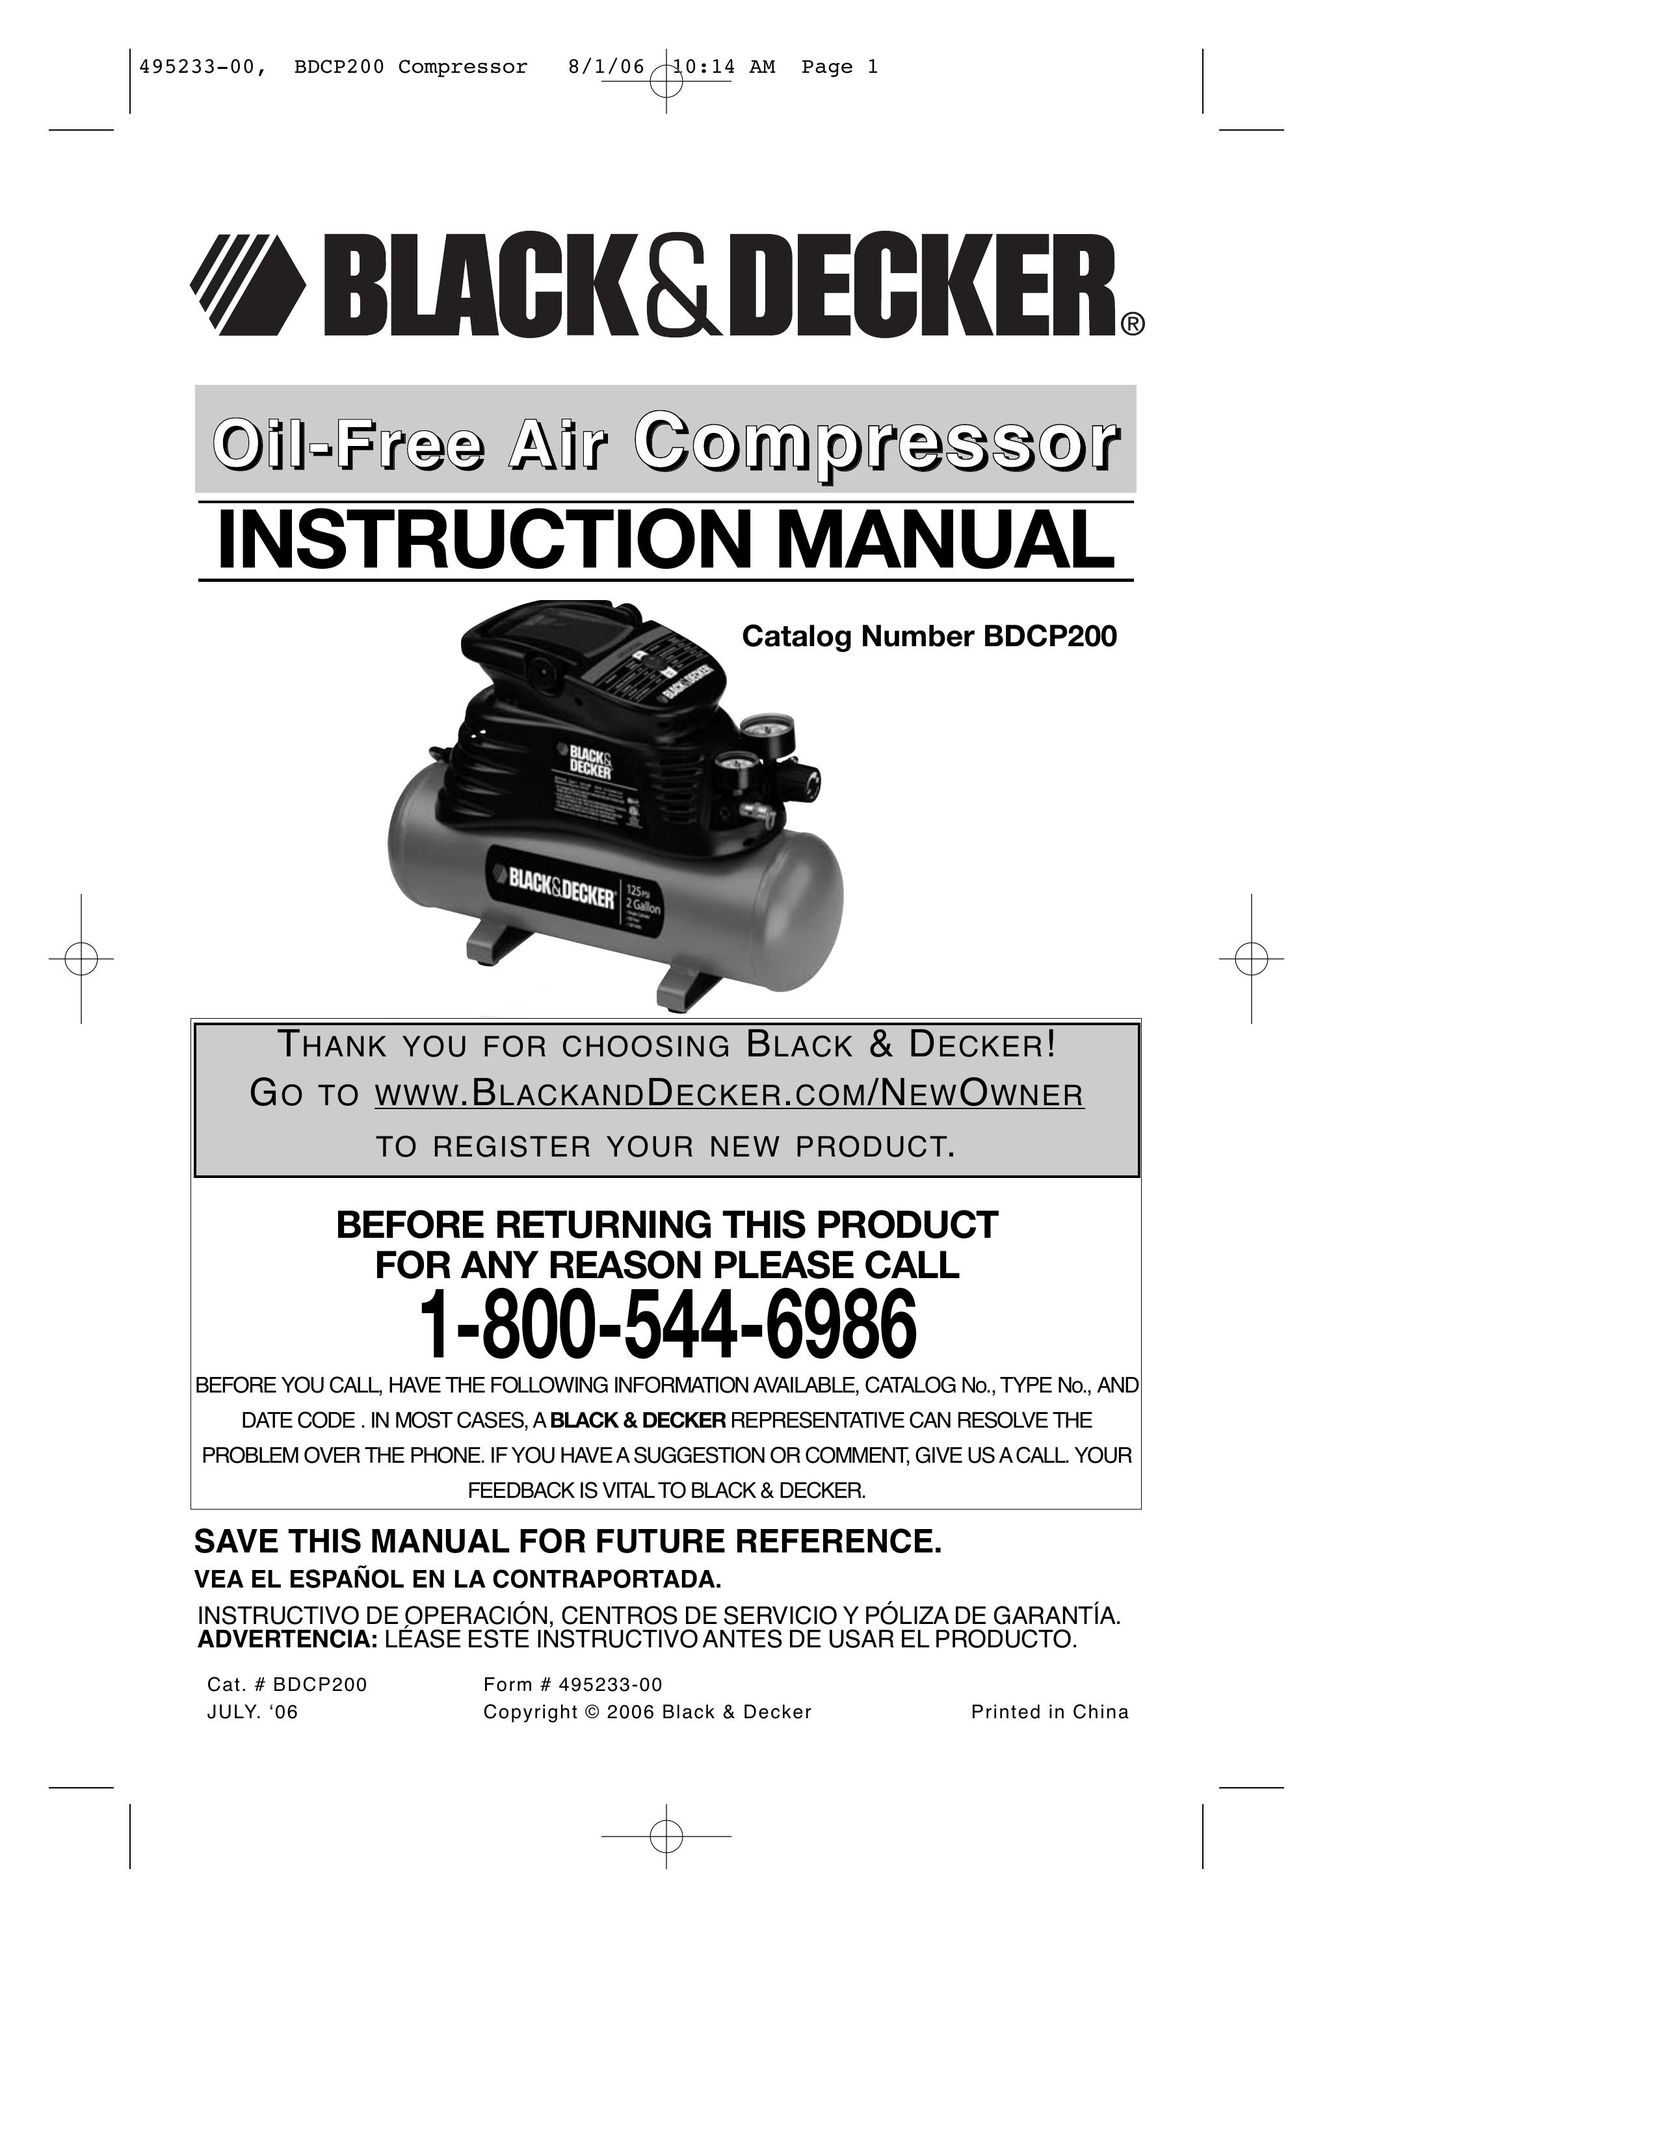 Black & Decker 495233-00 Air Compressor User Manual